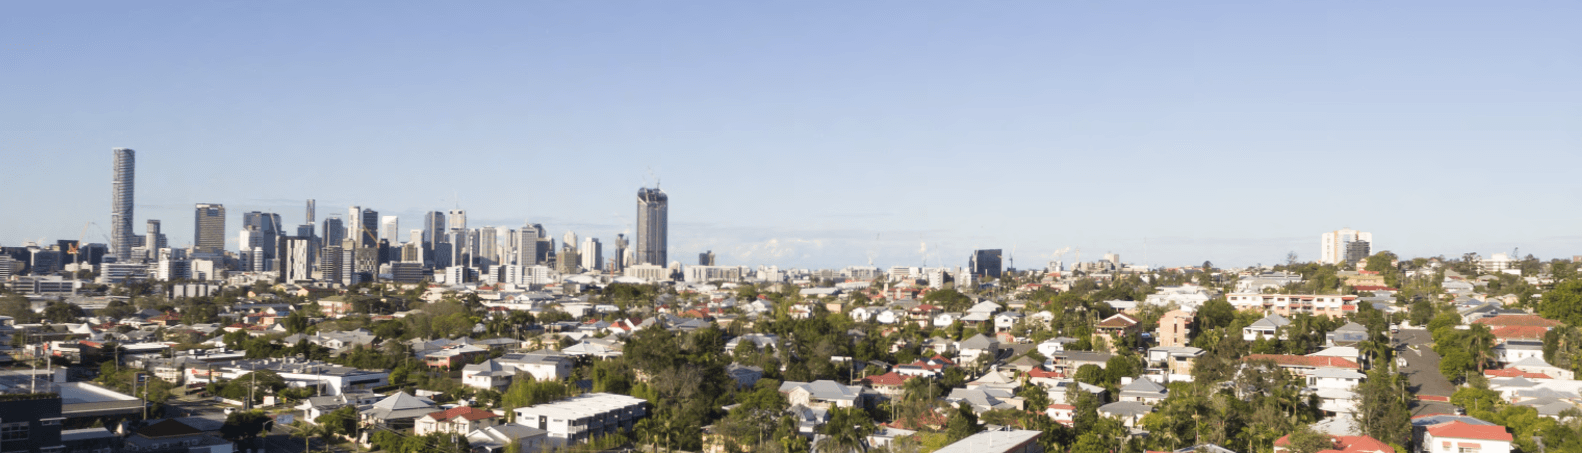 City view of Brisbane